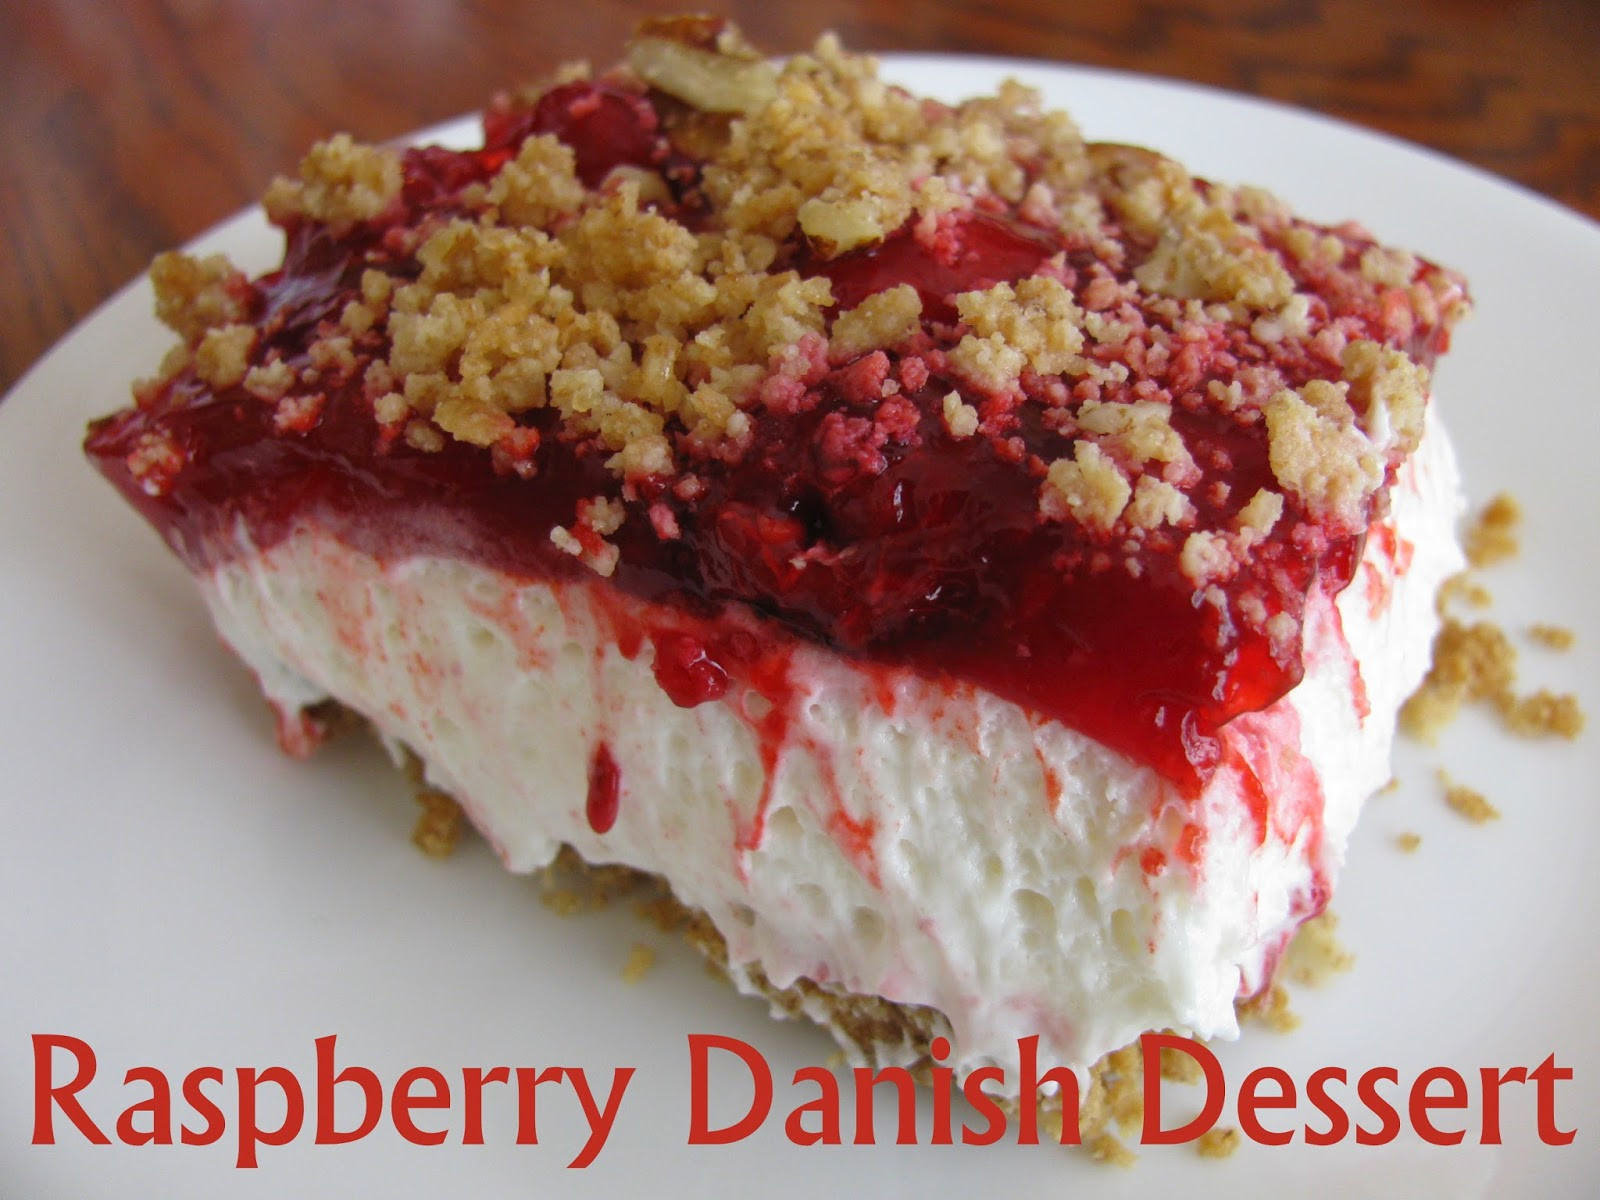 Raspberry Dessert Recipes
 Raspberry Danish Dessert